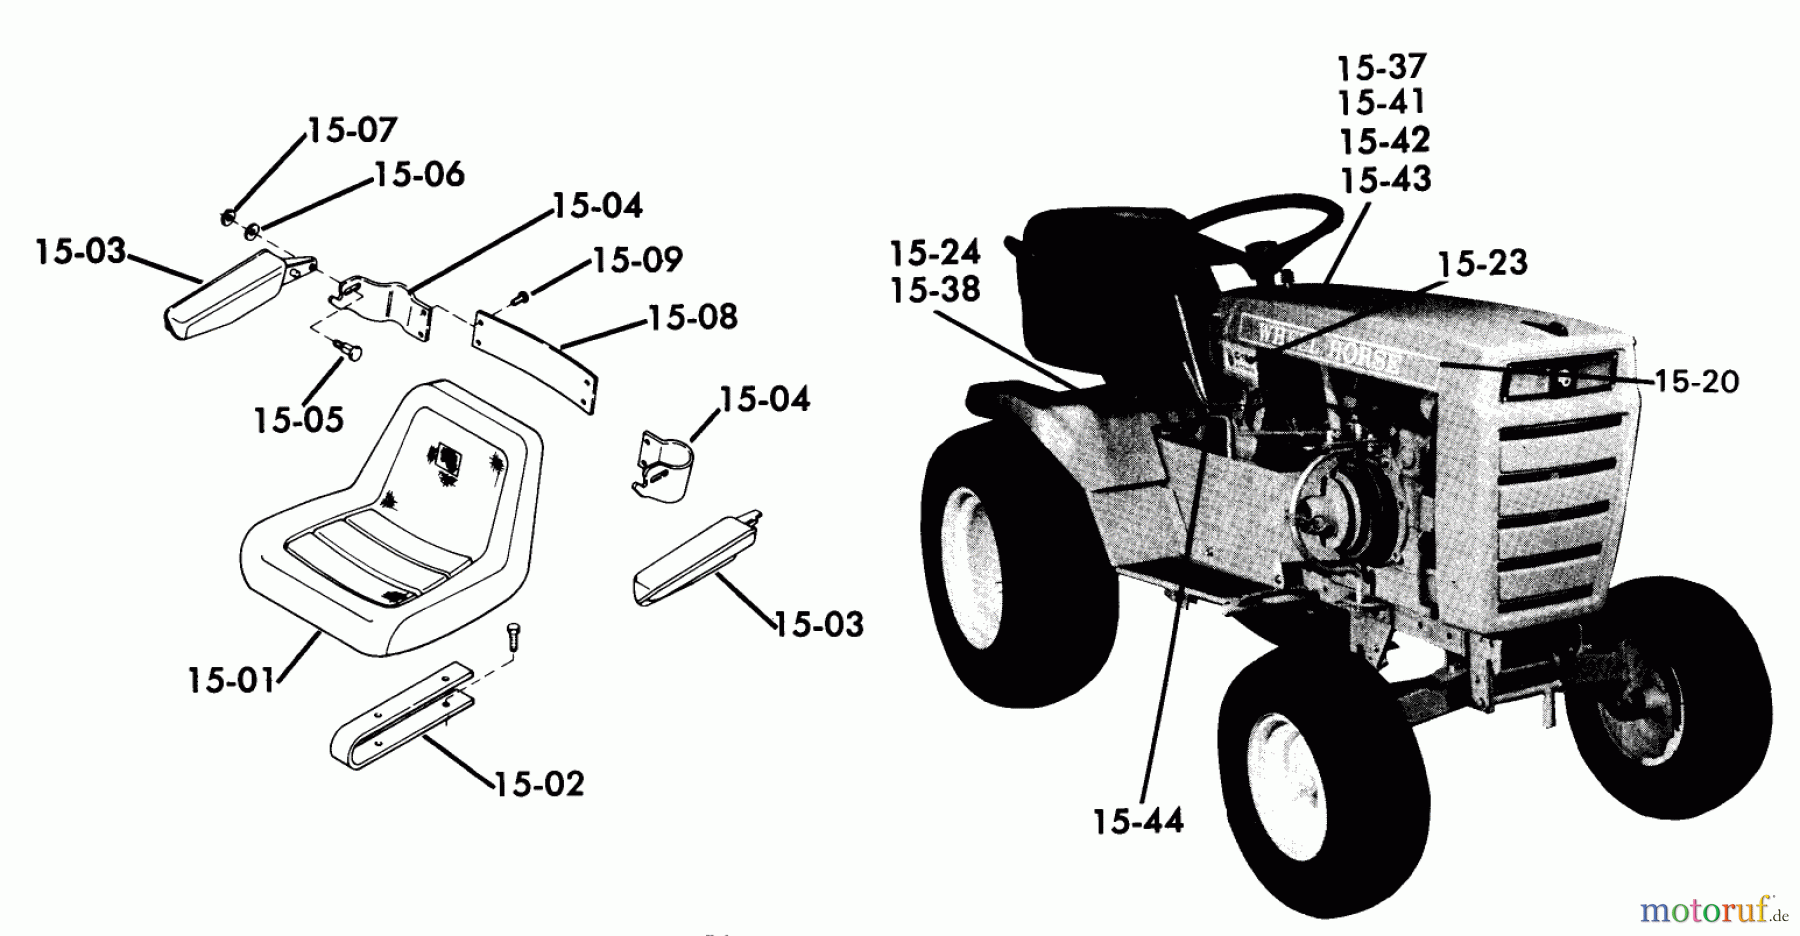  Toro Neu Mowers, Lawn & Garden Tractor Seite 1 71-12KS01 (C-120) - Toro C-120 Automatic Tractor, 1977 SEATS, DECALS, MISC. TRIM